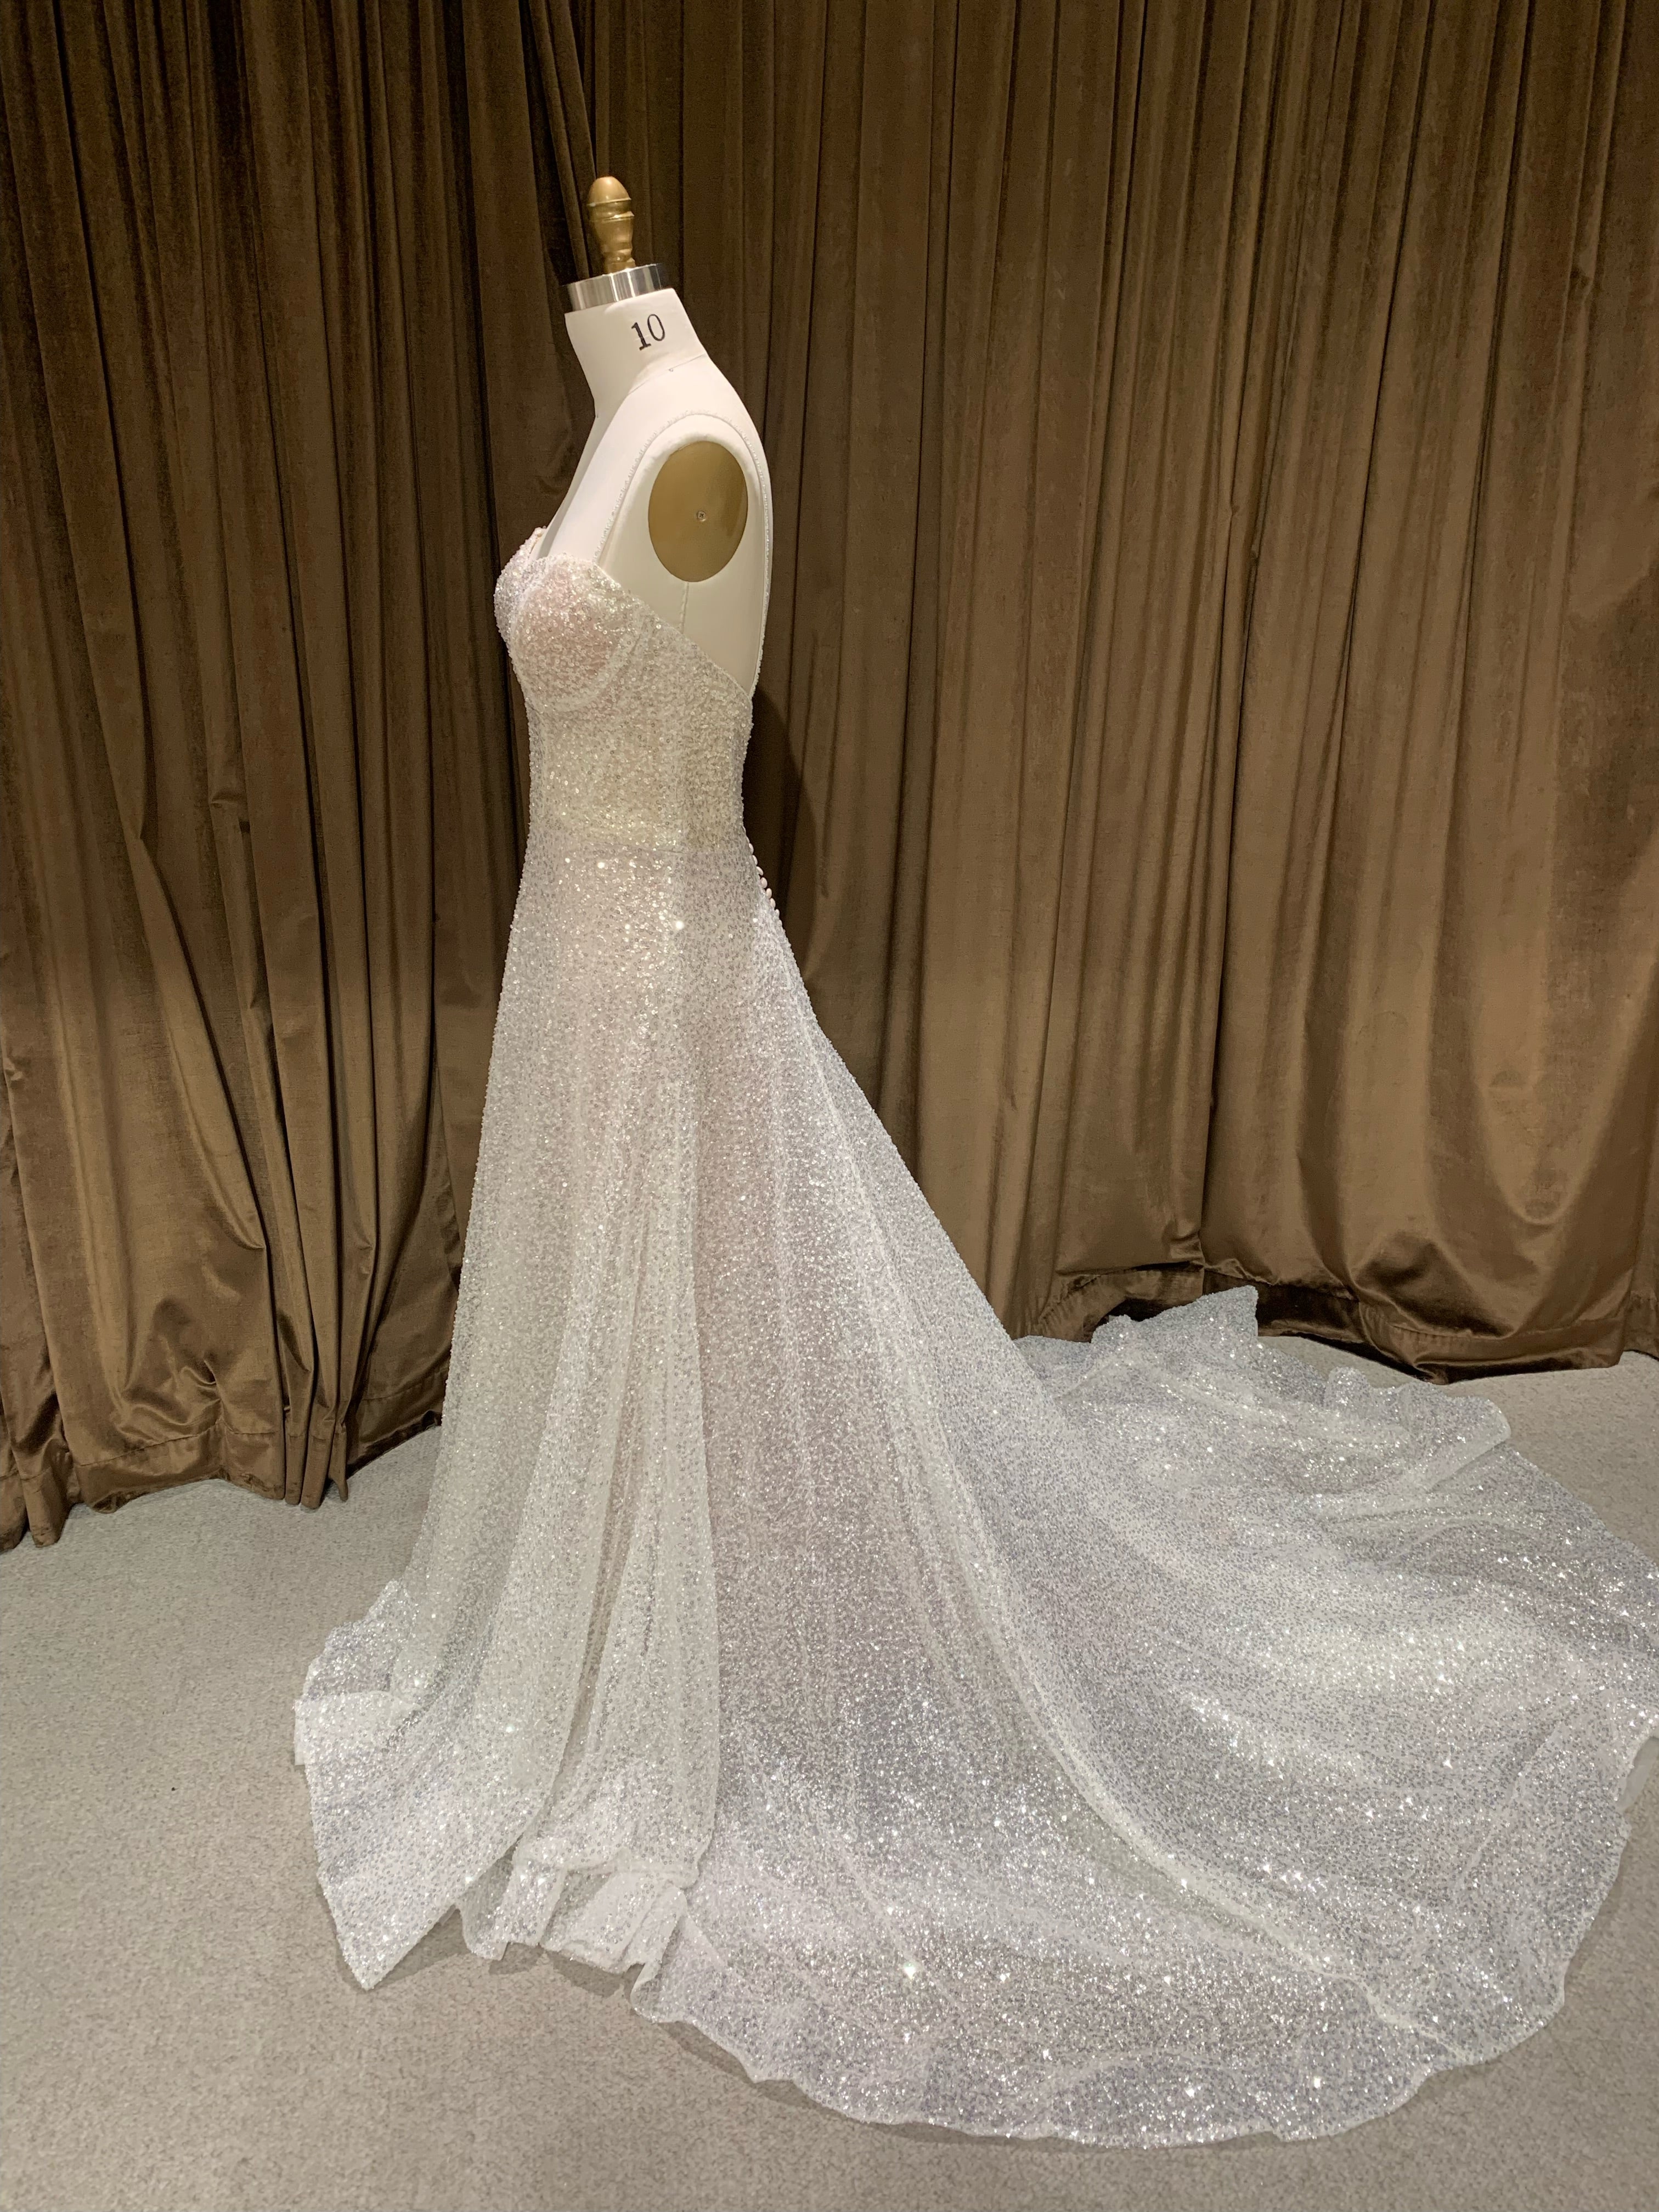 GC#36376 - Madeline Gardner for Mori Lee Celestina Wedding Dress in Size 12